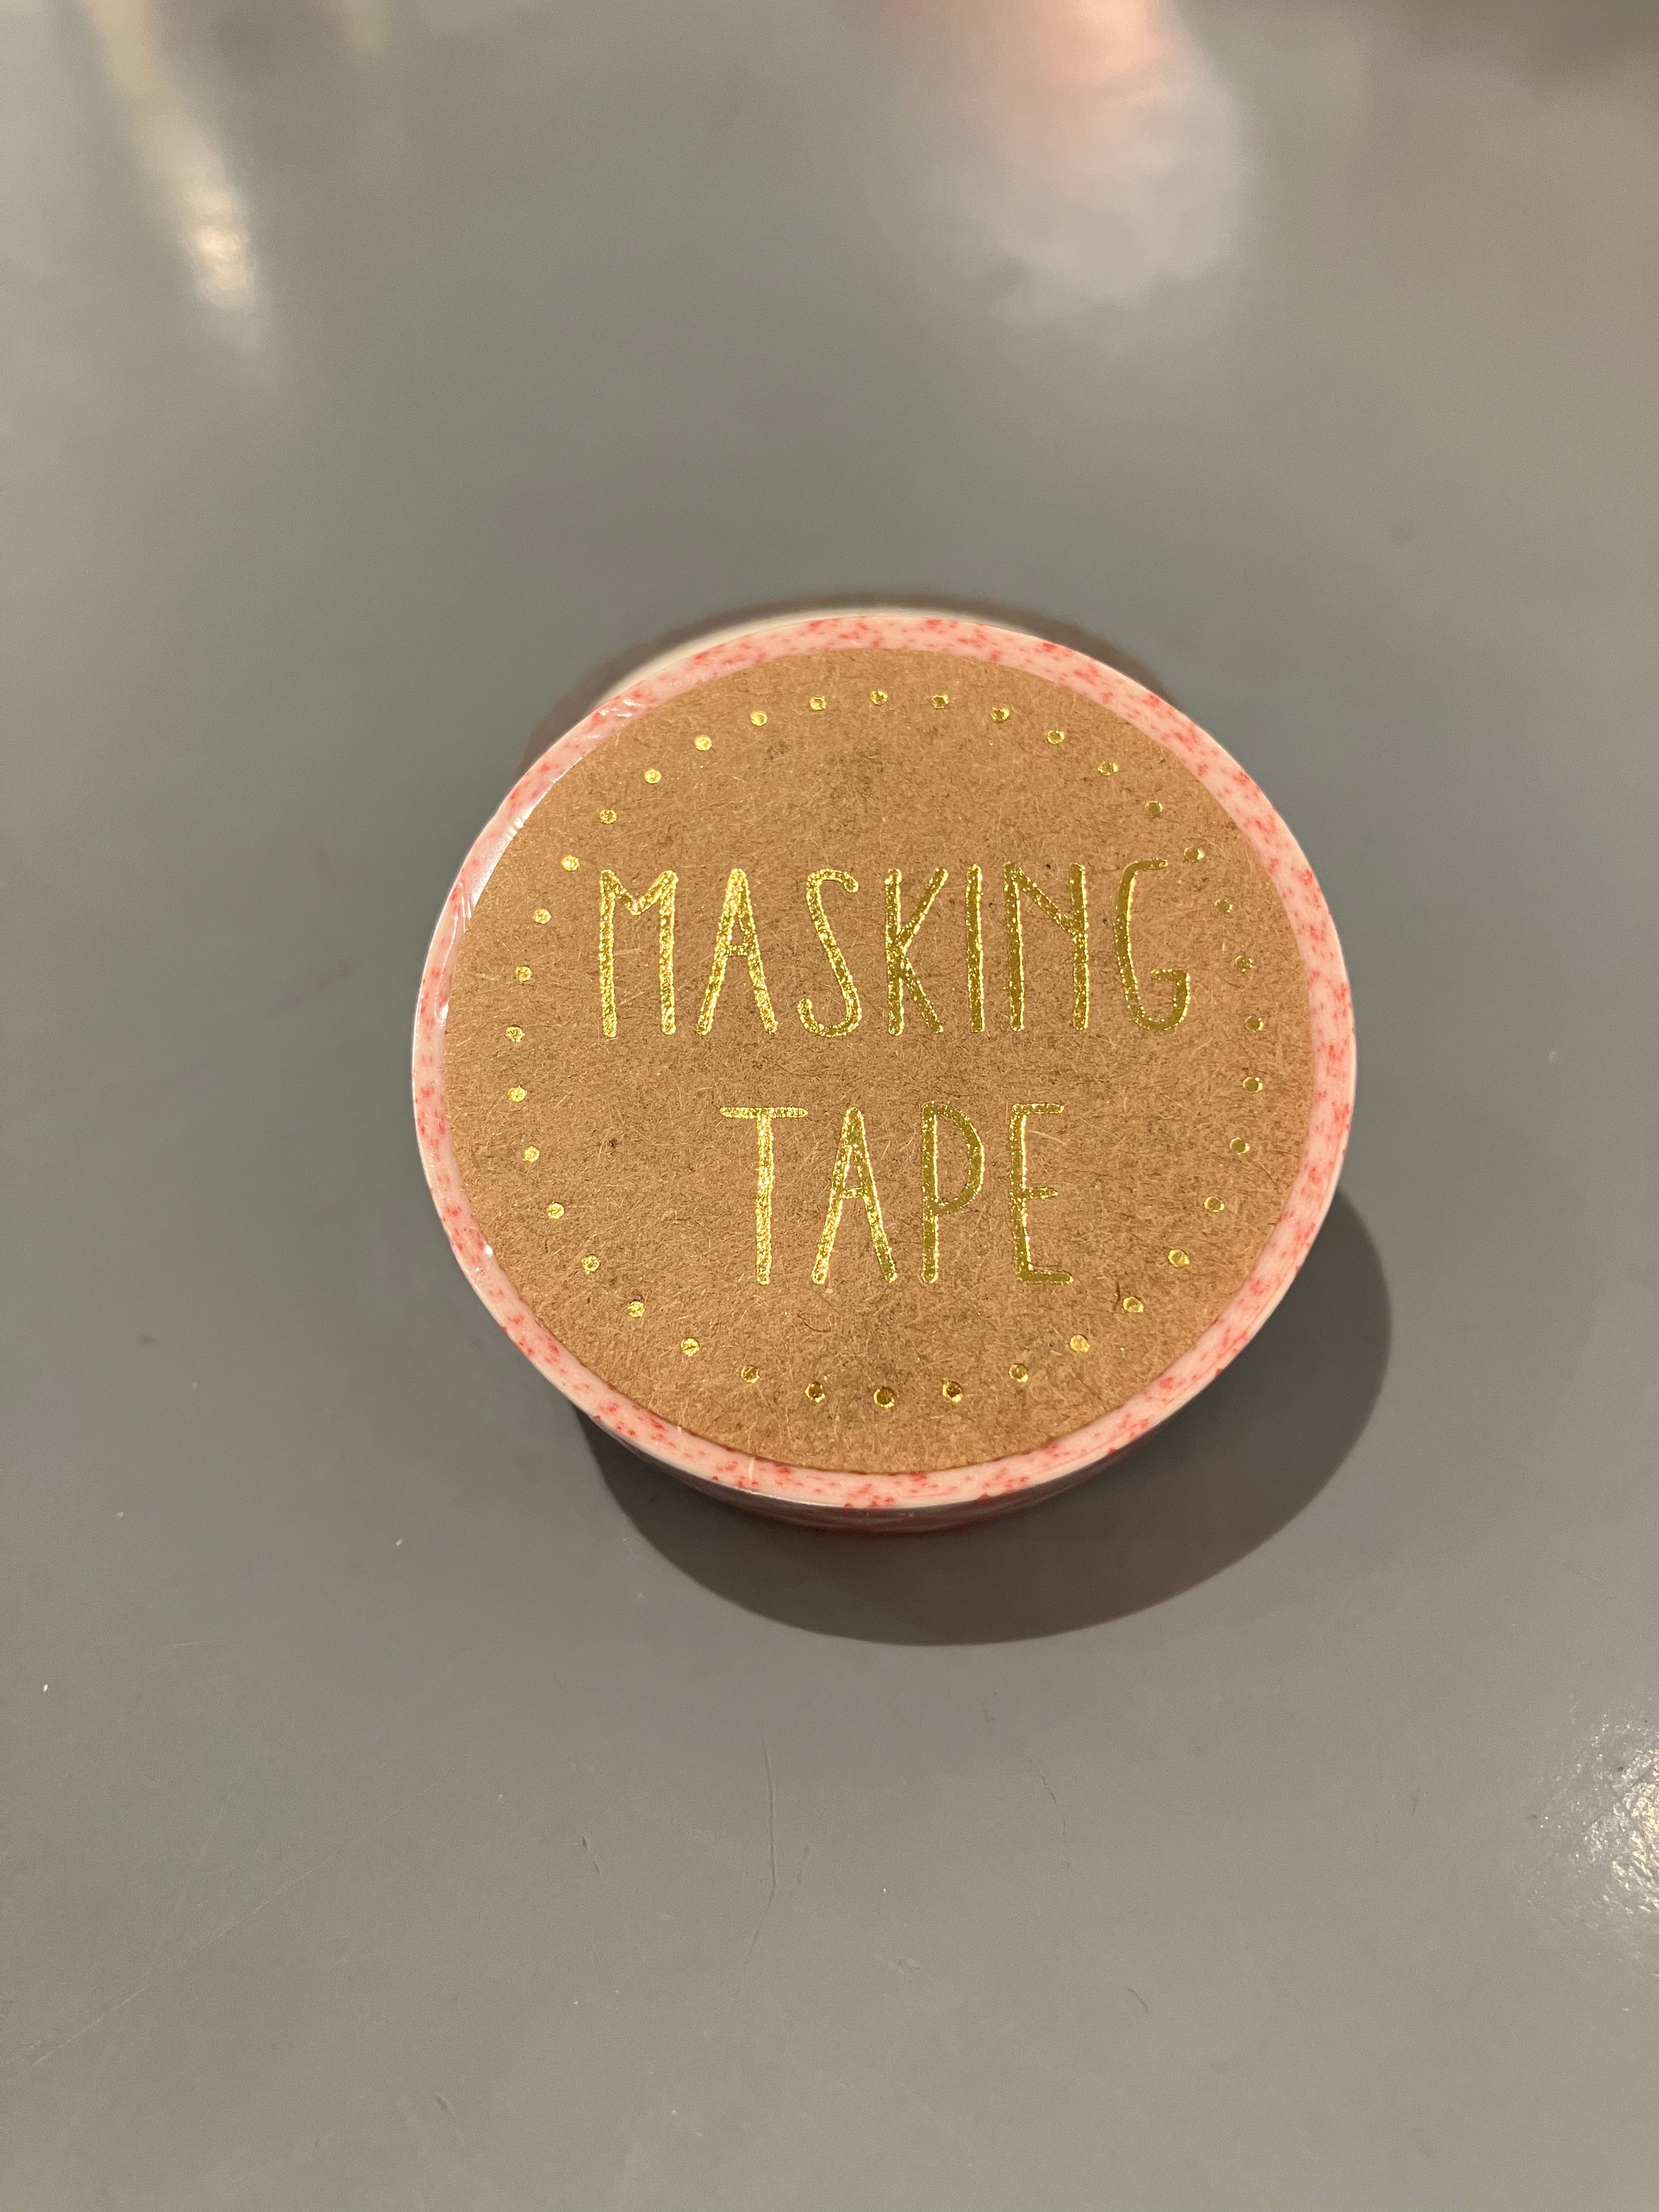 Decorative tape